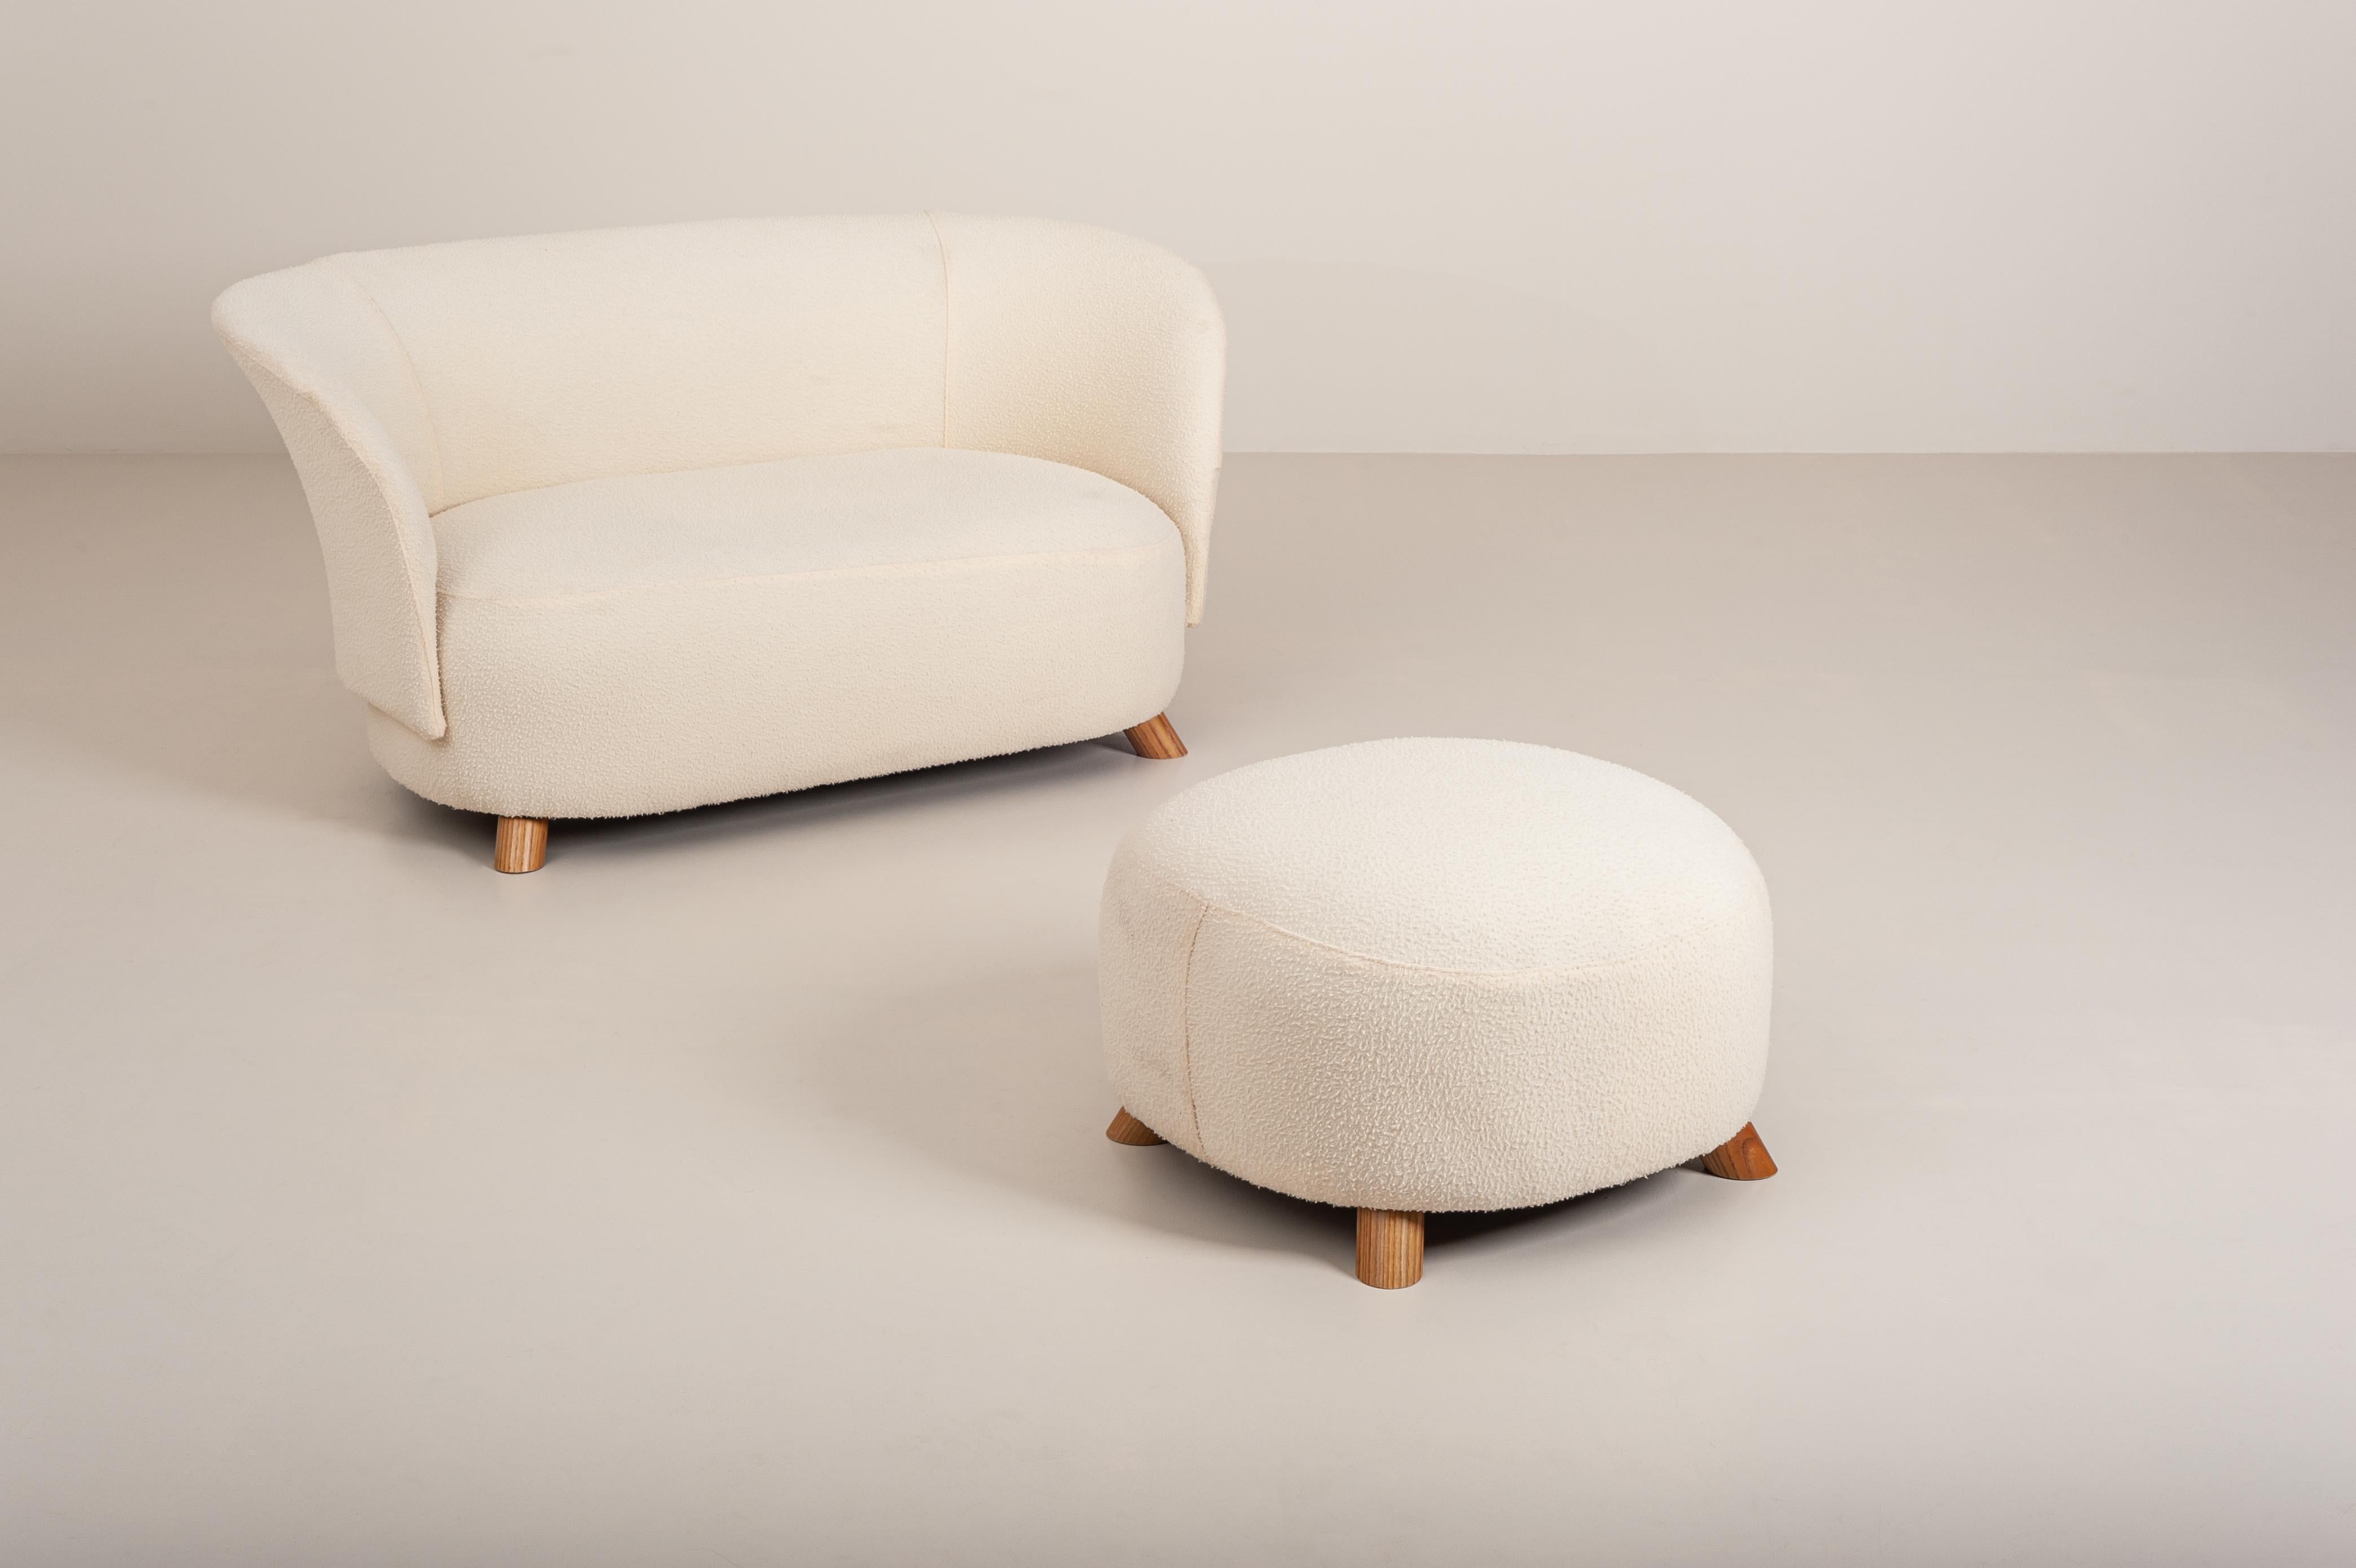 Scandinavian Modern Danish Two Seater Sofa Upholstered in 'Casentino' Tuscan Fabric, Denmark, 1940s For Sale